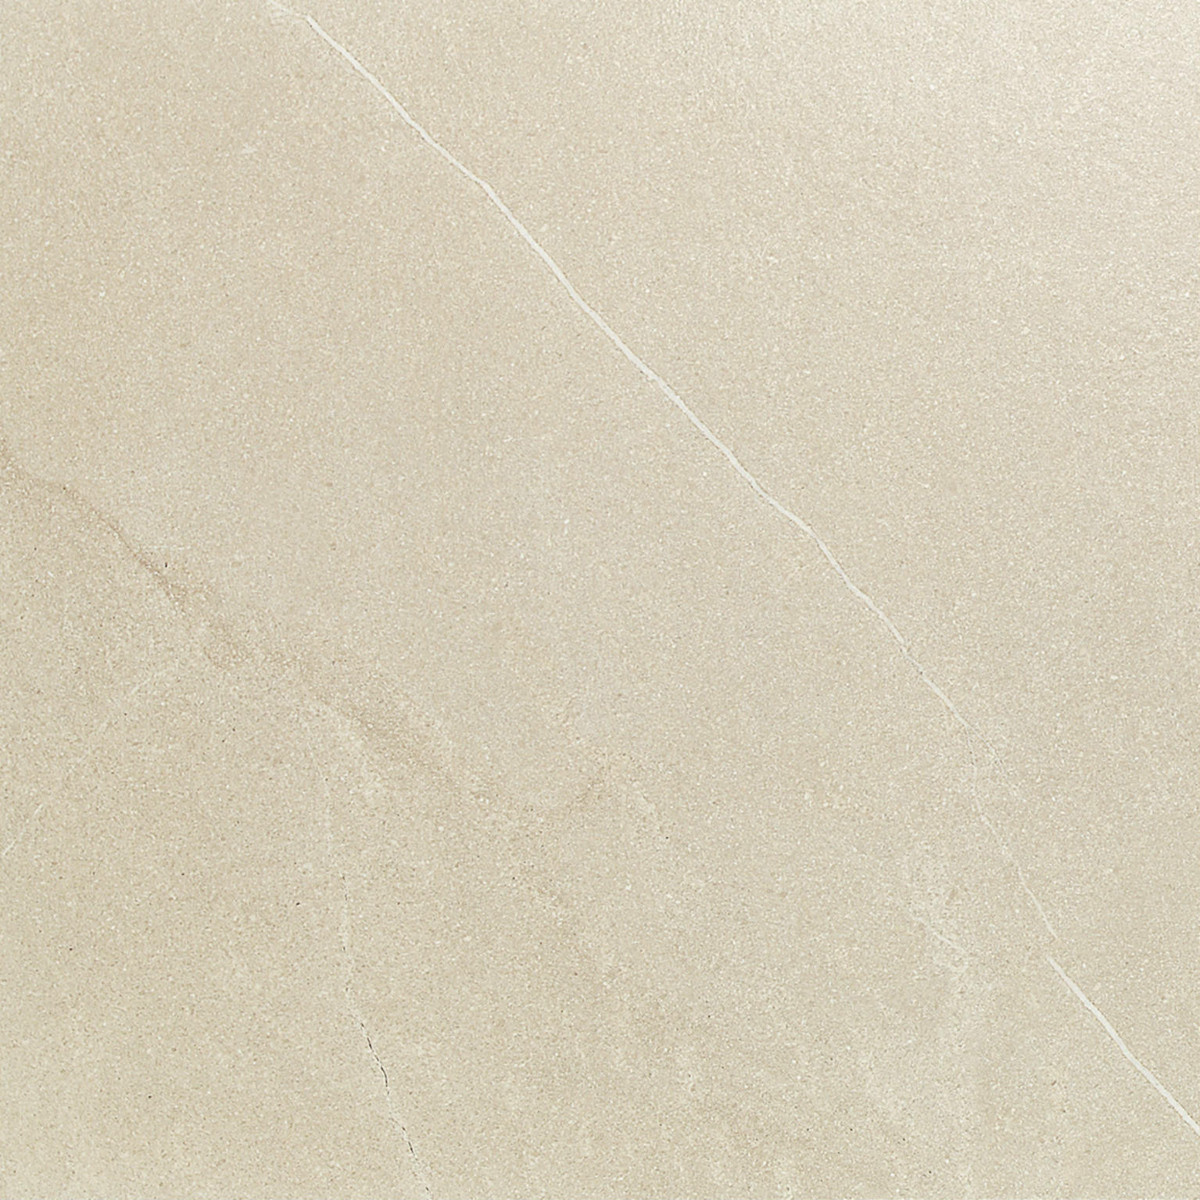 CONTACT - Carrelage Sol Antidérapant Effet pierre - Sand 60x60 - Réf.176121